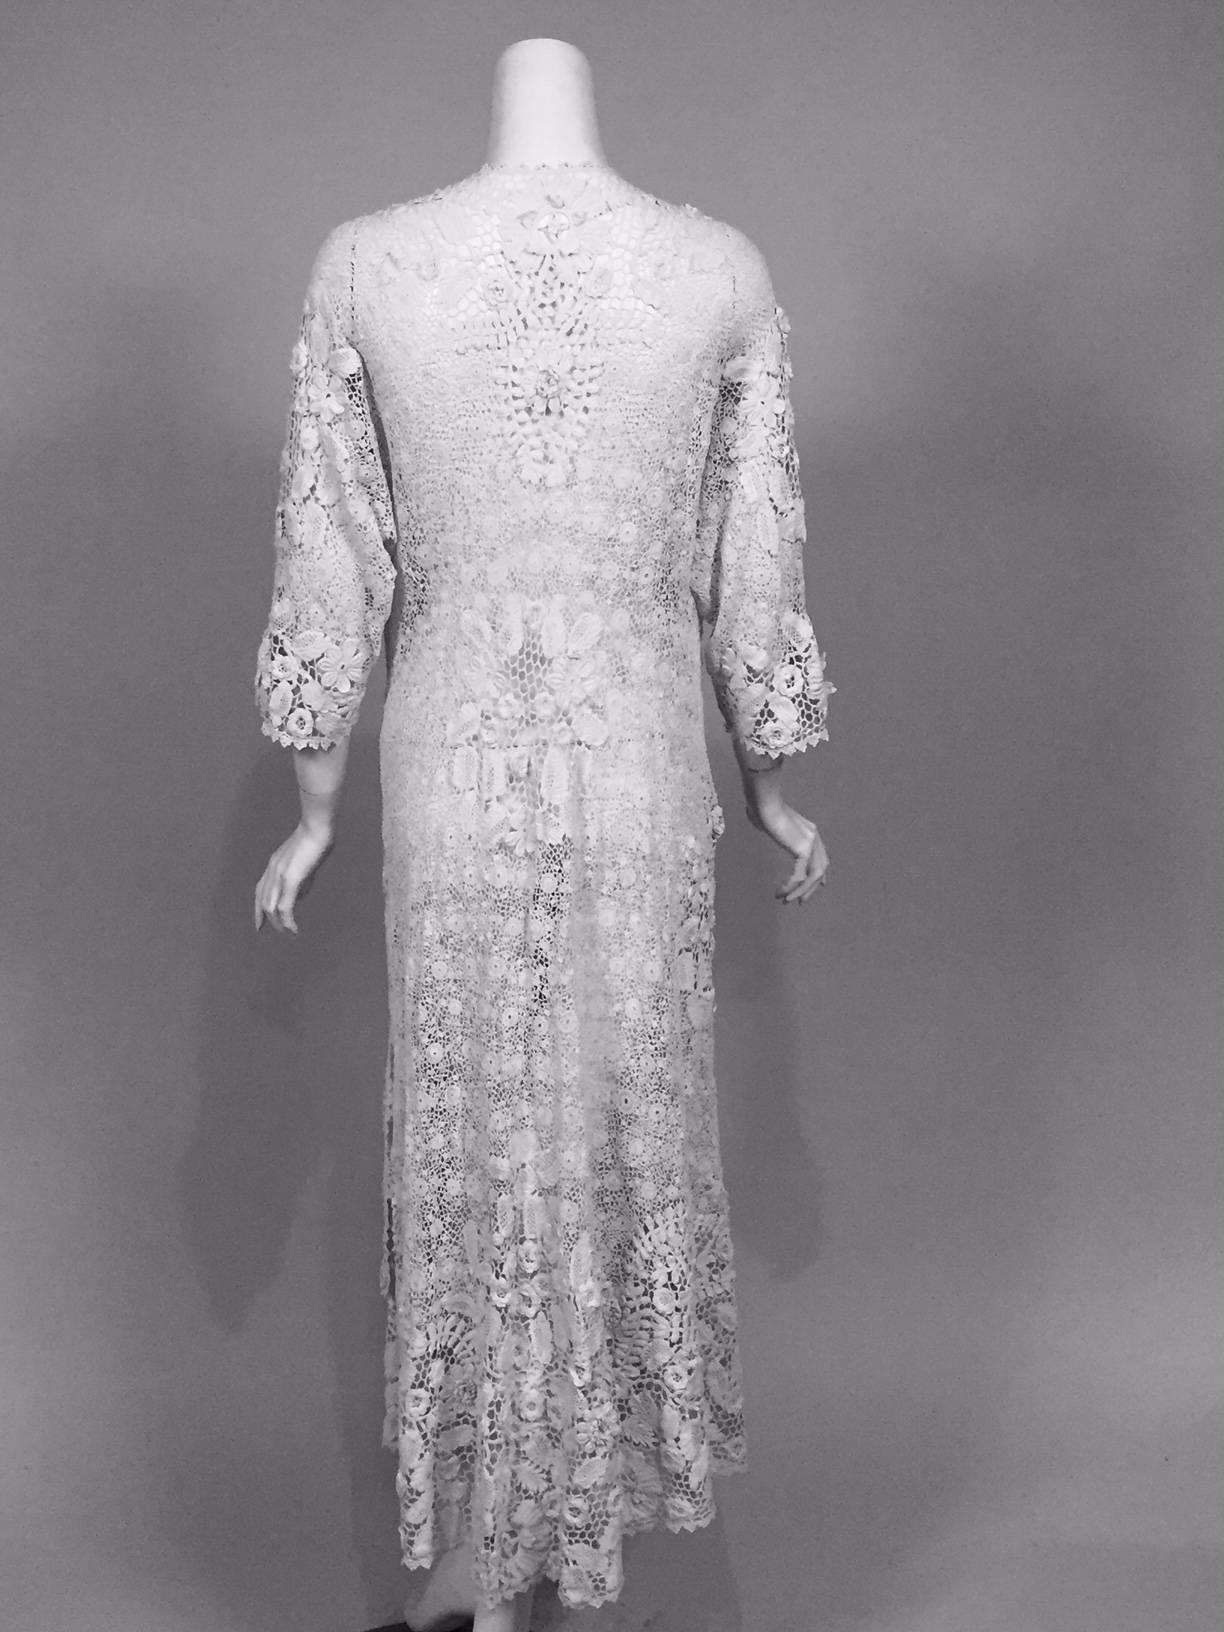 Women's Irish Lace Hand Made White Coat or Dress, Early 20th Century